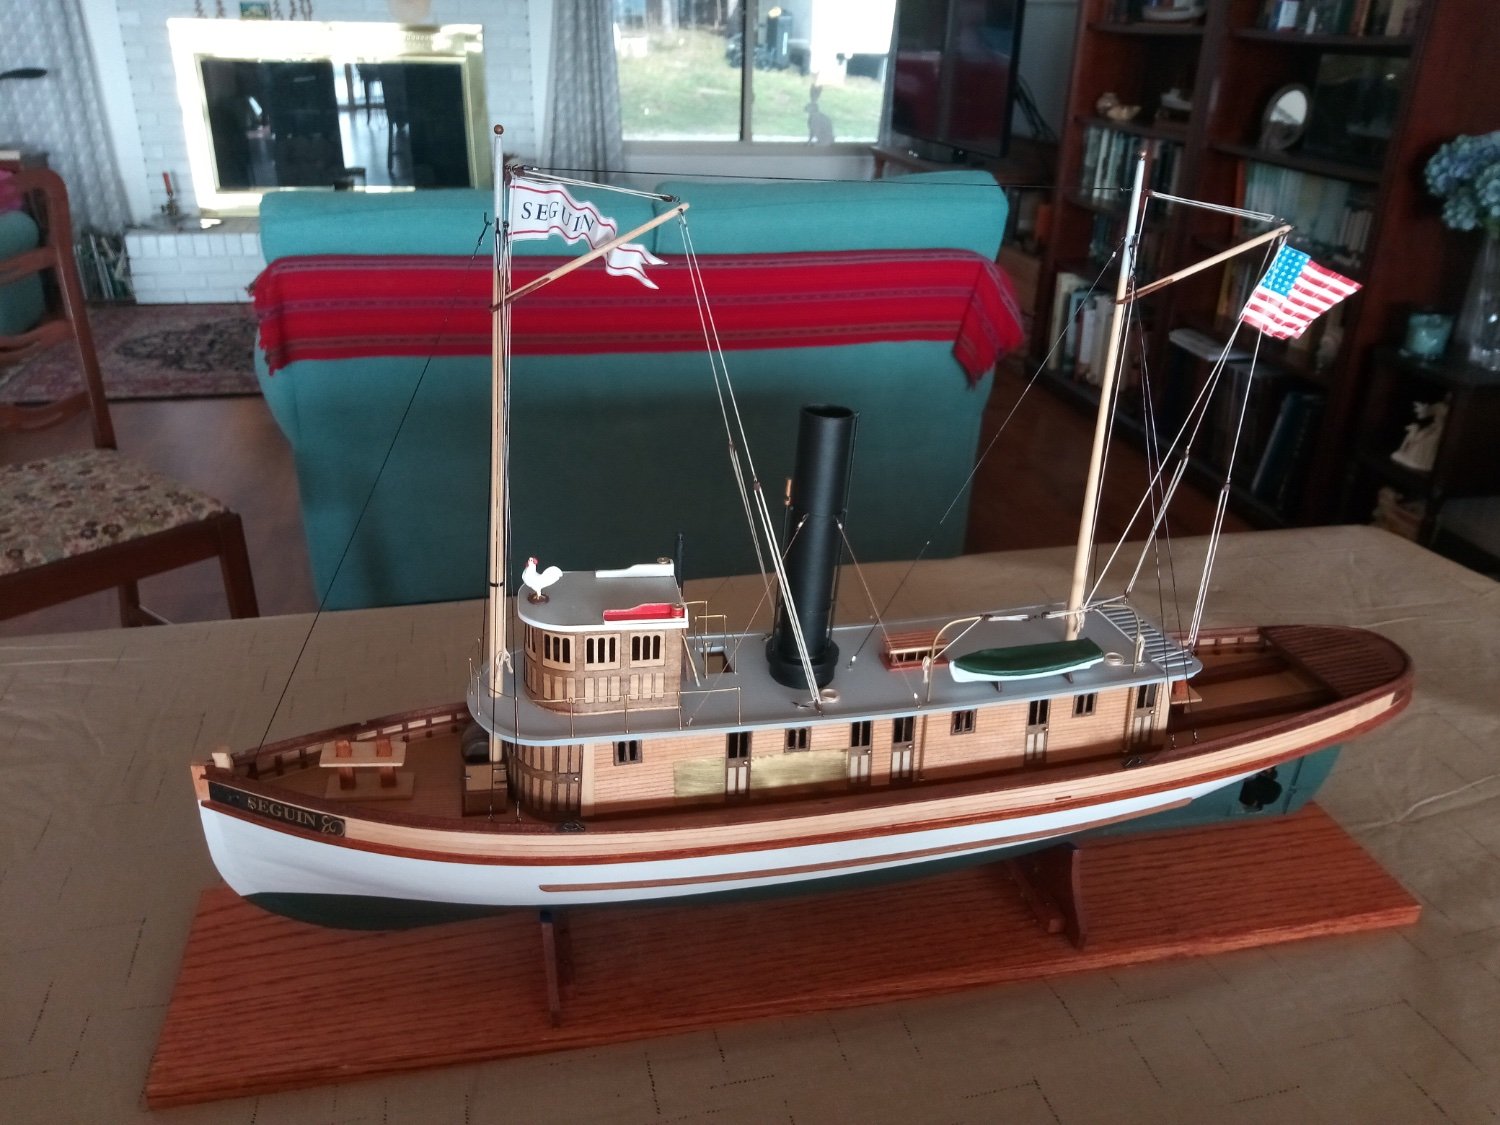 Robert E Lee Model Boat Kit,Amati,static display,kit,wooden kit,steamboat,river  boats